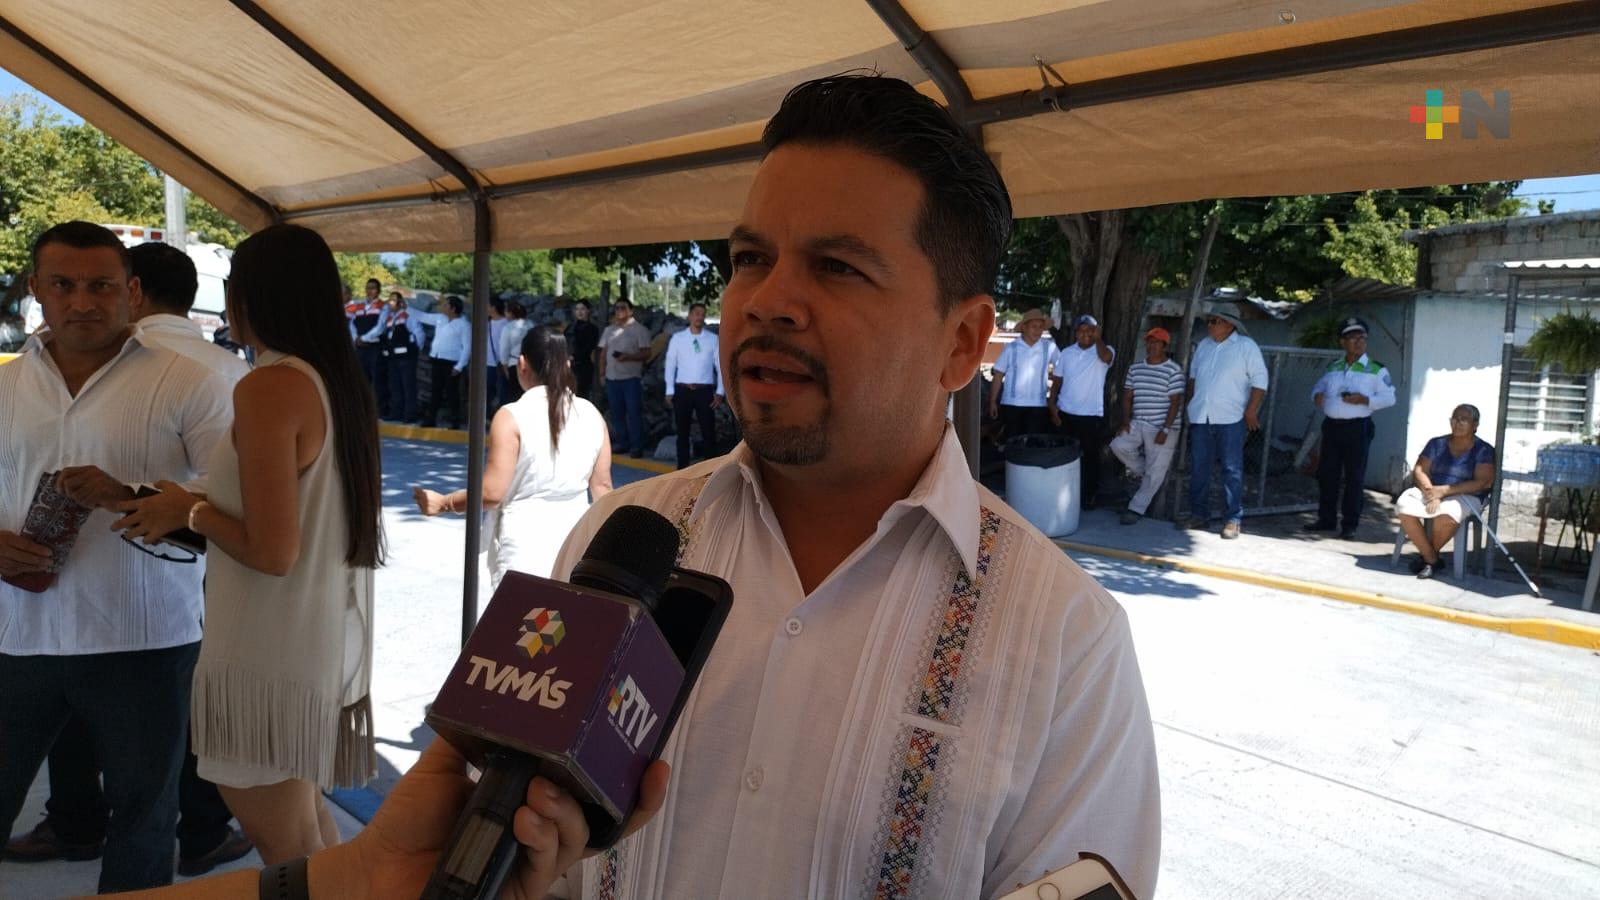 Gobierno de Veracruz da impulso turístico con Festival Cempoala; será del 18 al 20 de agosto